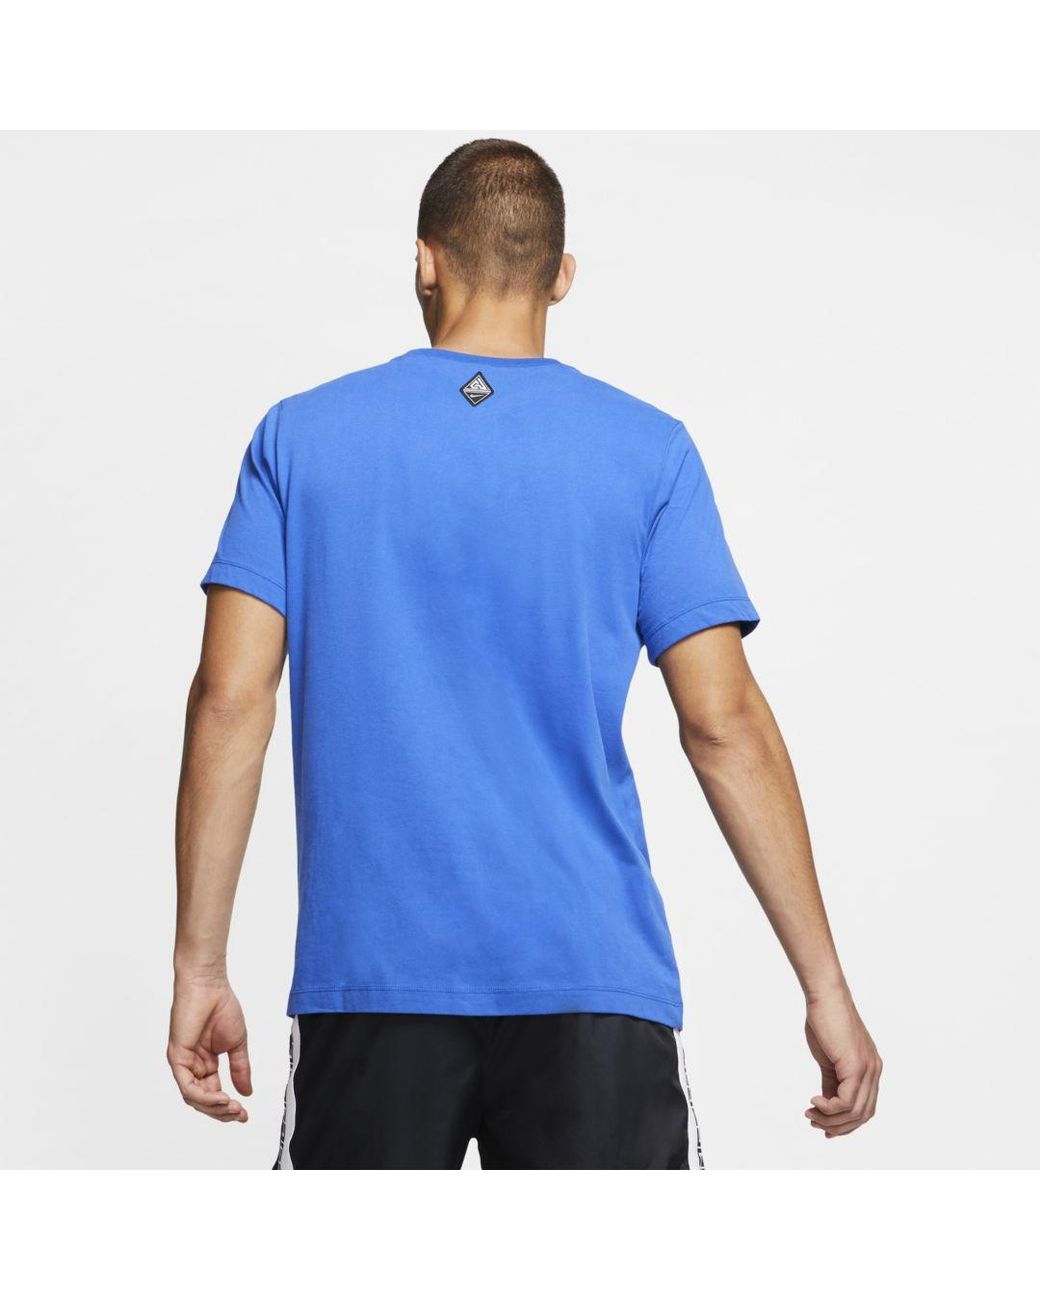 Nike Dri Fit Black Yellow Orange Swoosh Giannis Greek Freak T-Shirt Size  Small